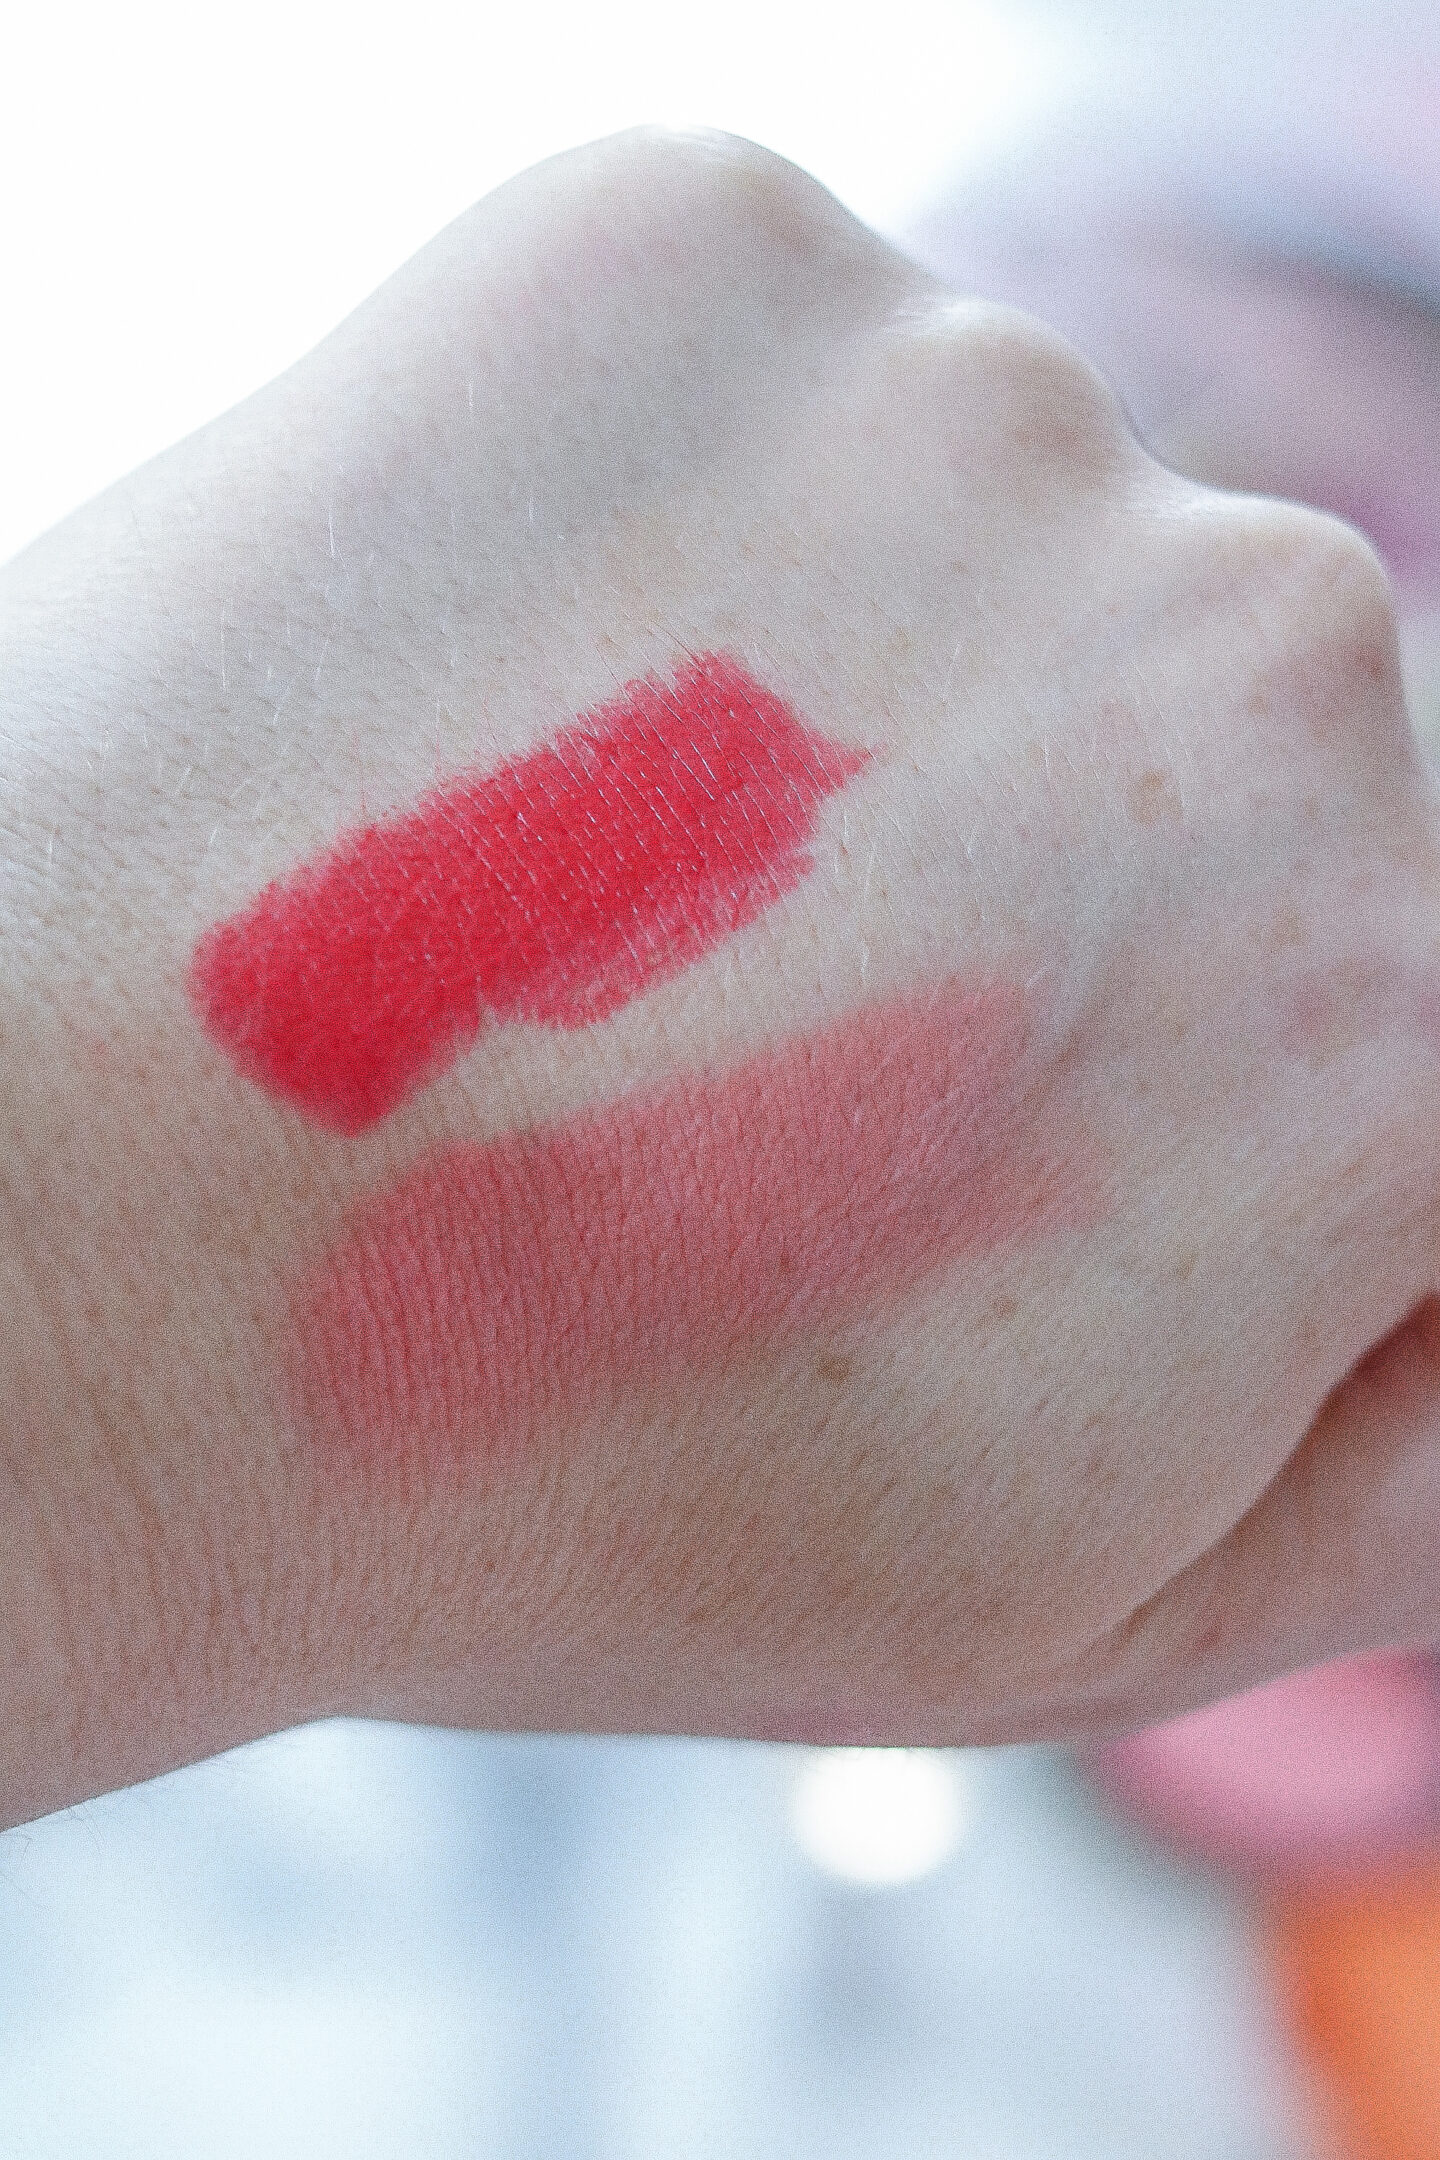 Hermes Blush Review I Dreaminlace.com #makeup #hermes #makeupaddict